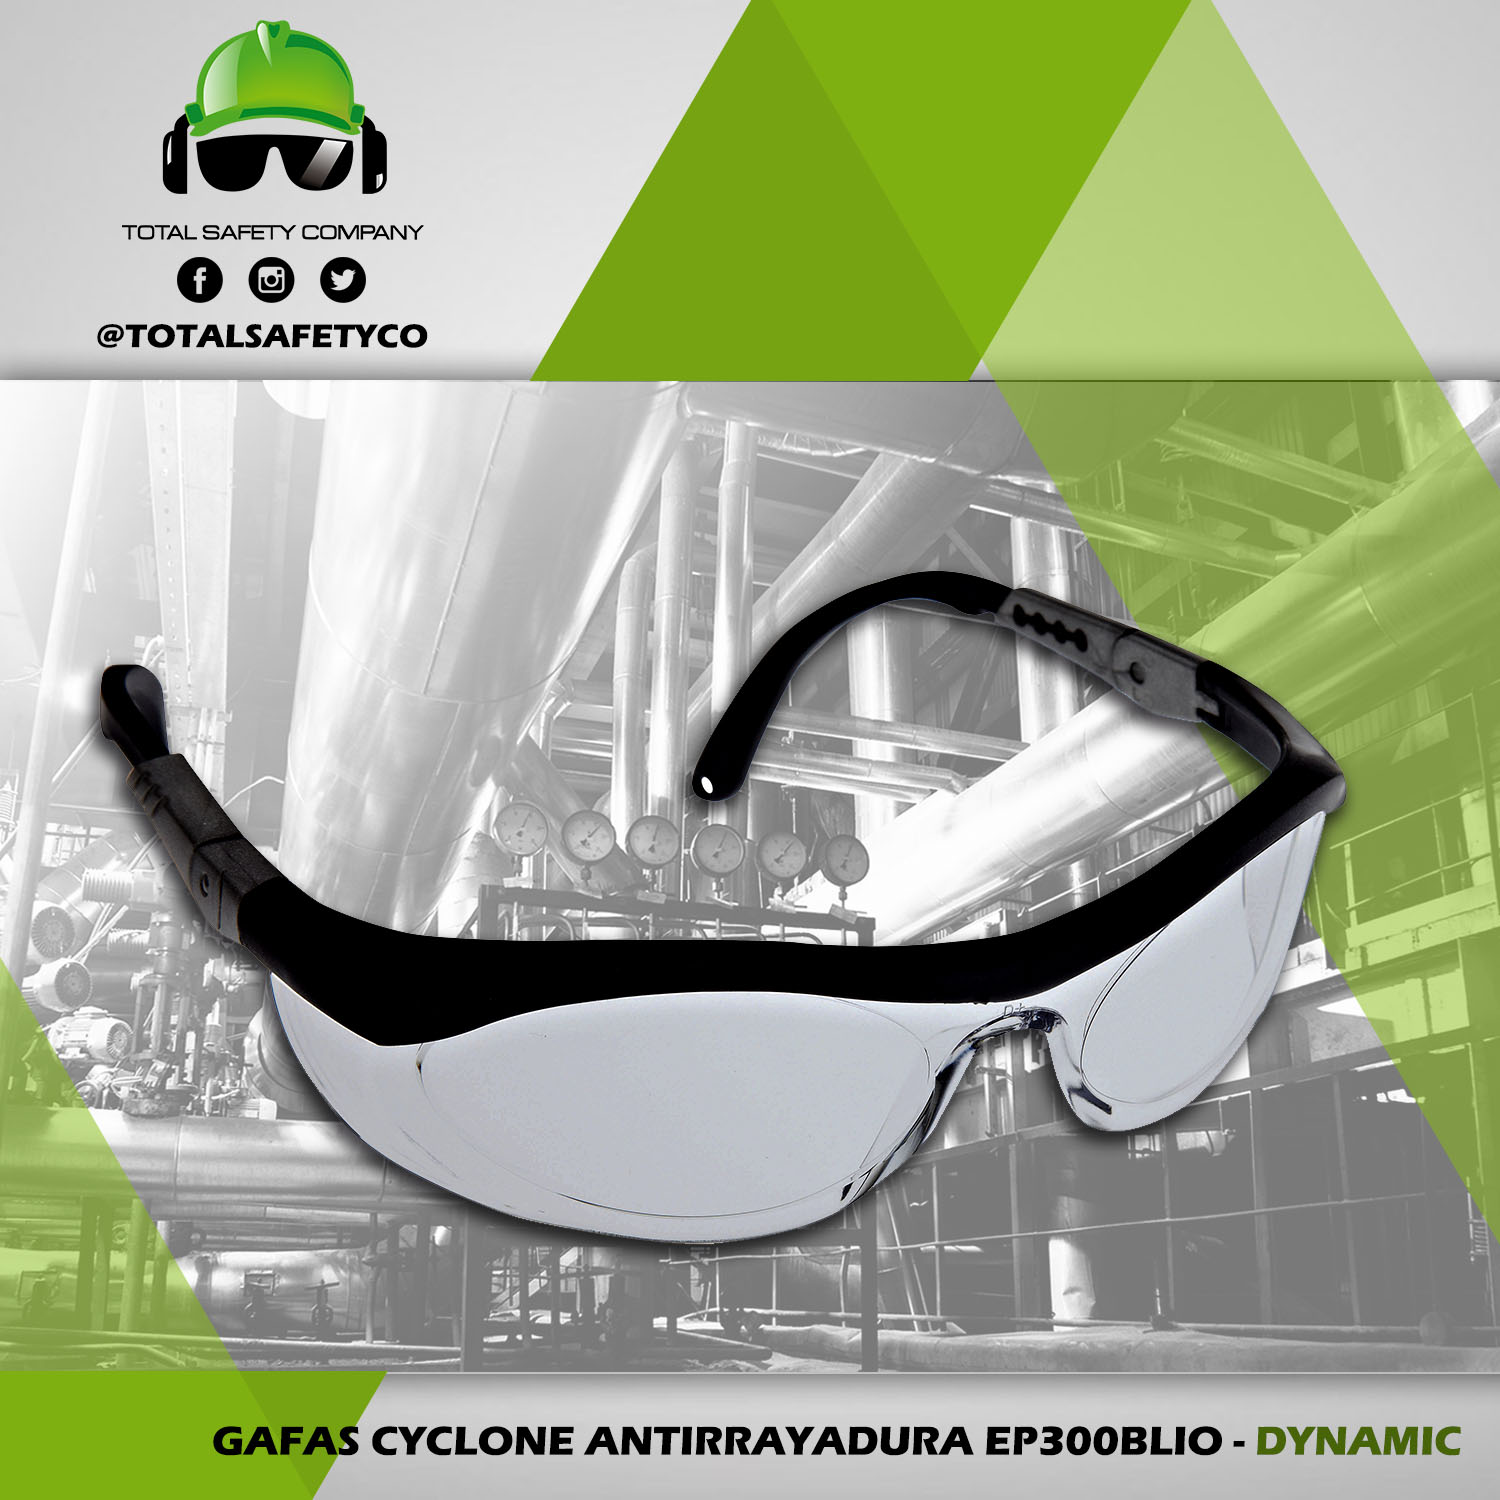 Gafas Cyclone antirrayadura  EP300BLIO